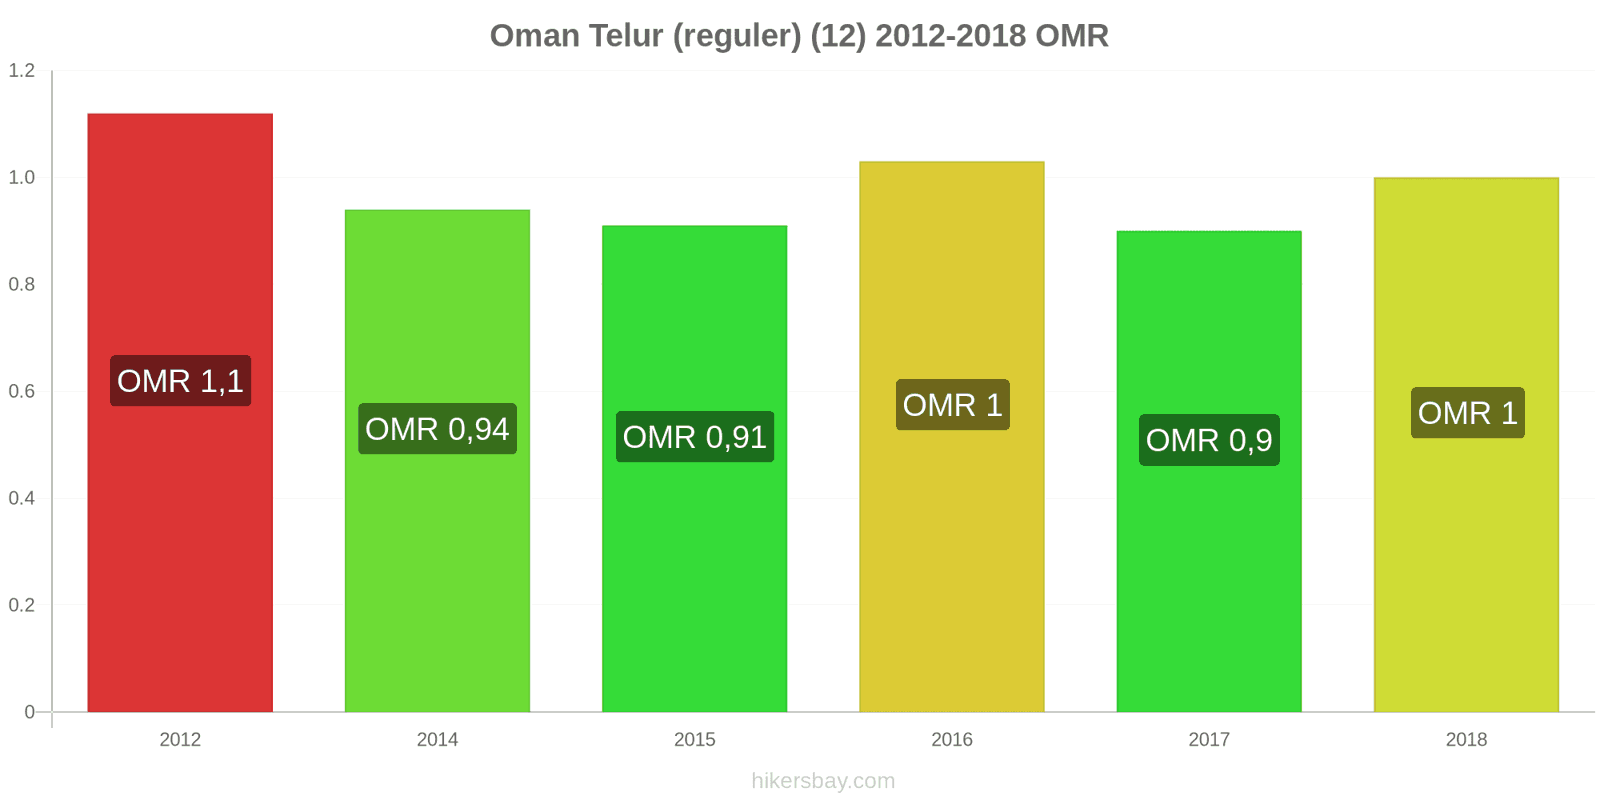 Oman perubahan harga Telur (biasa) (12) hikersbay.com